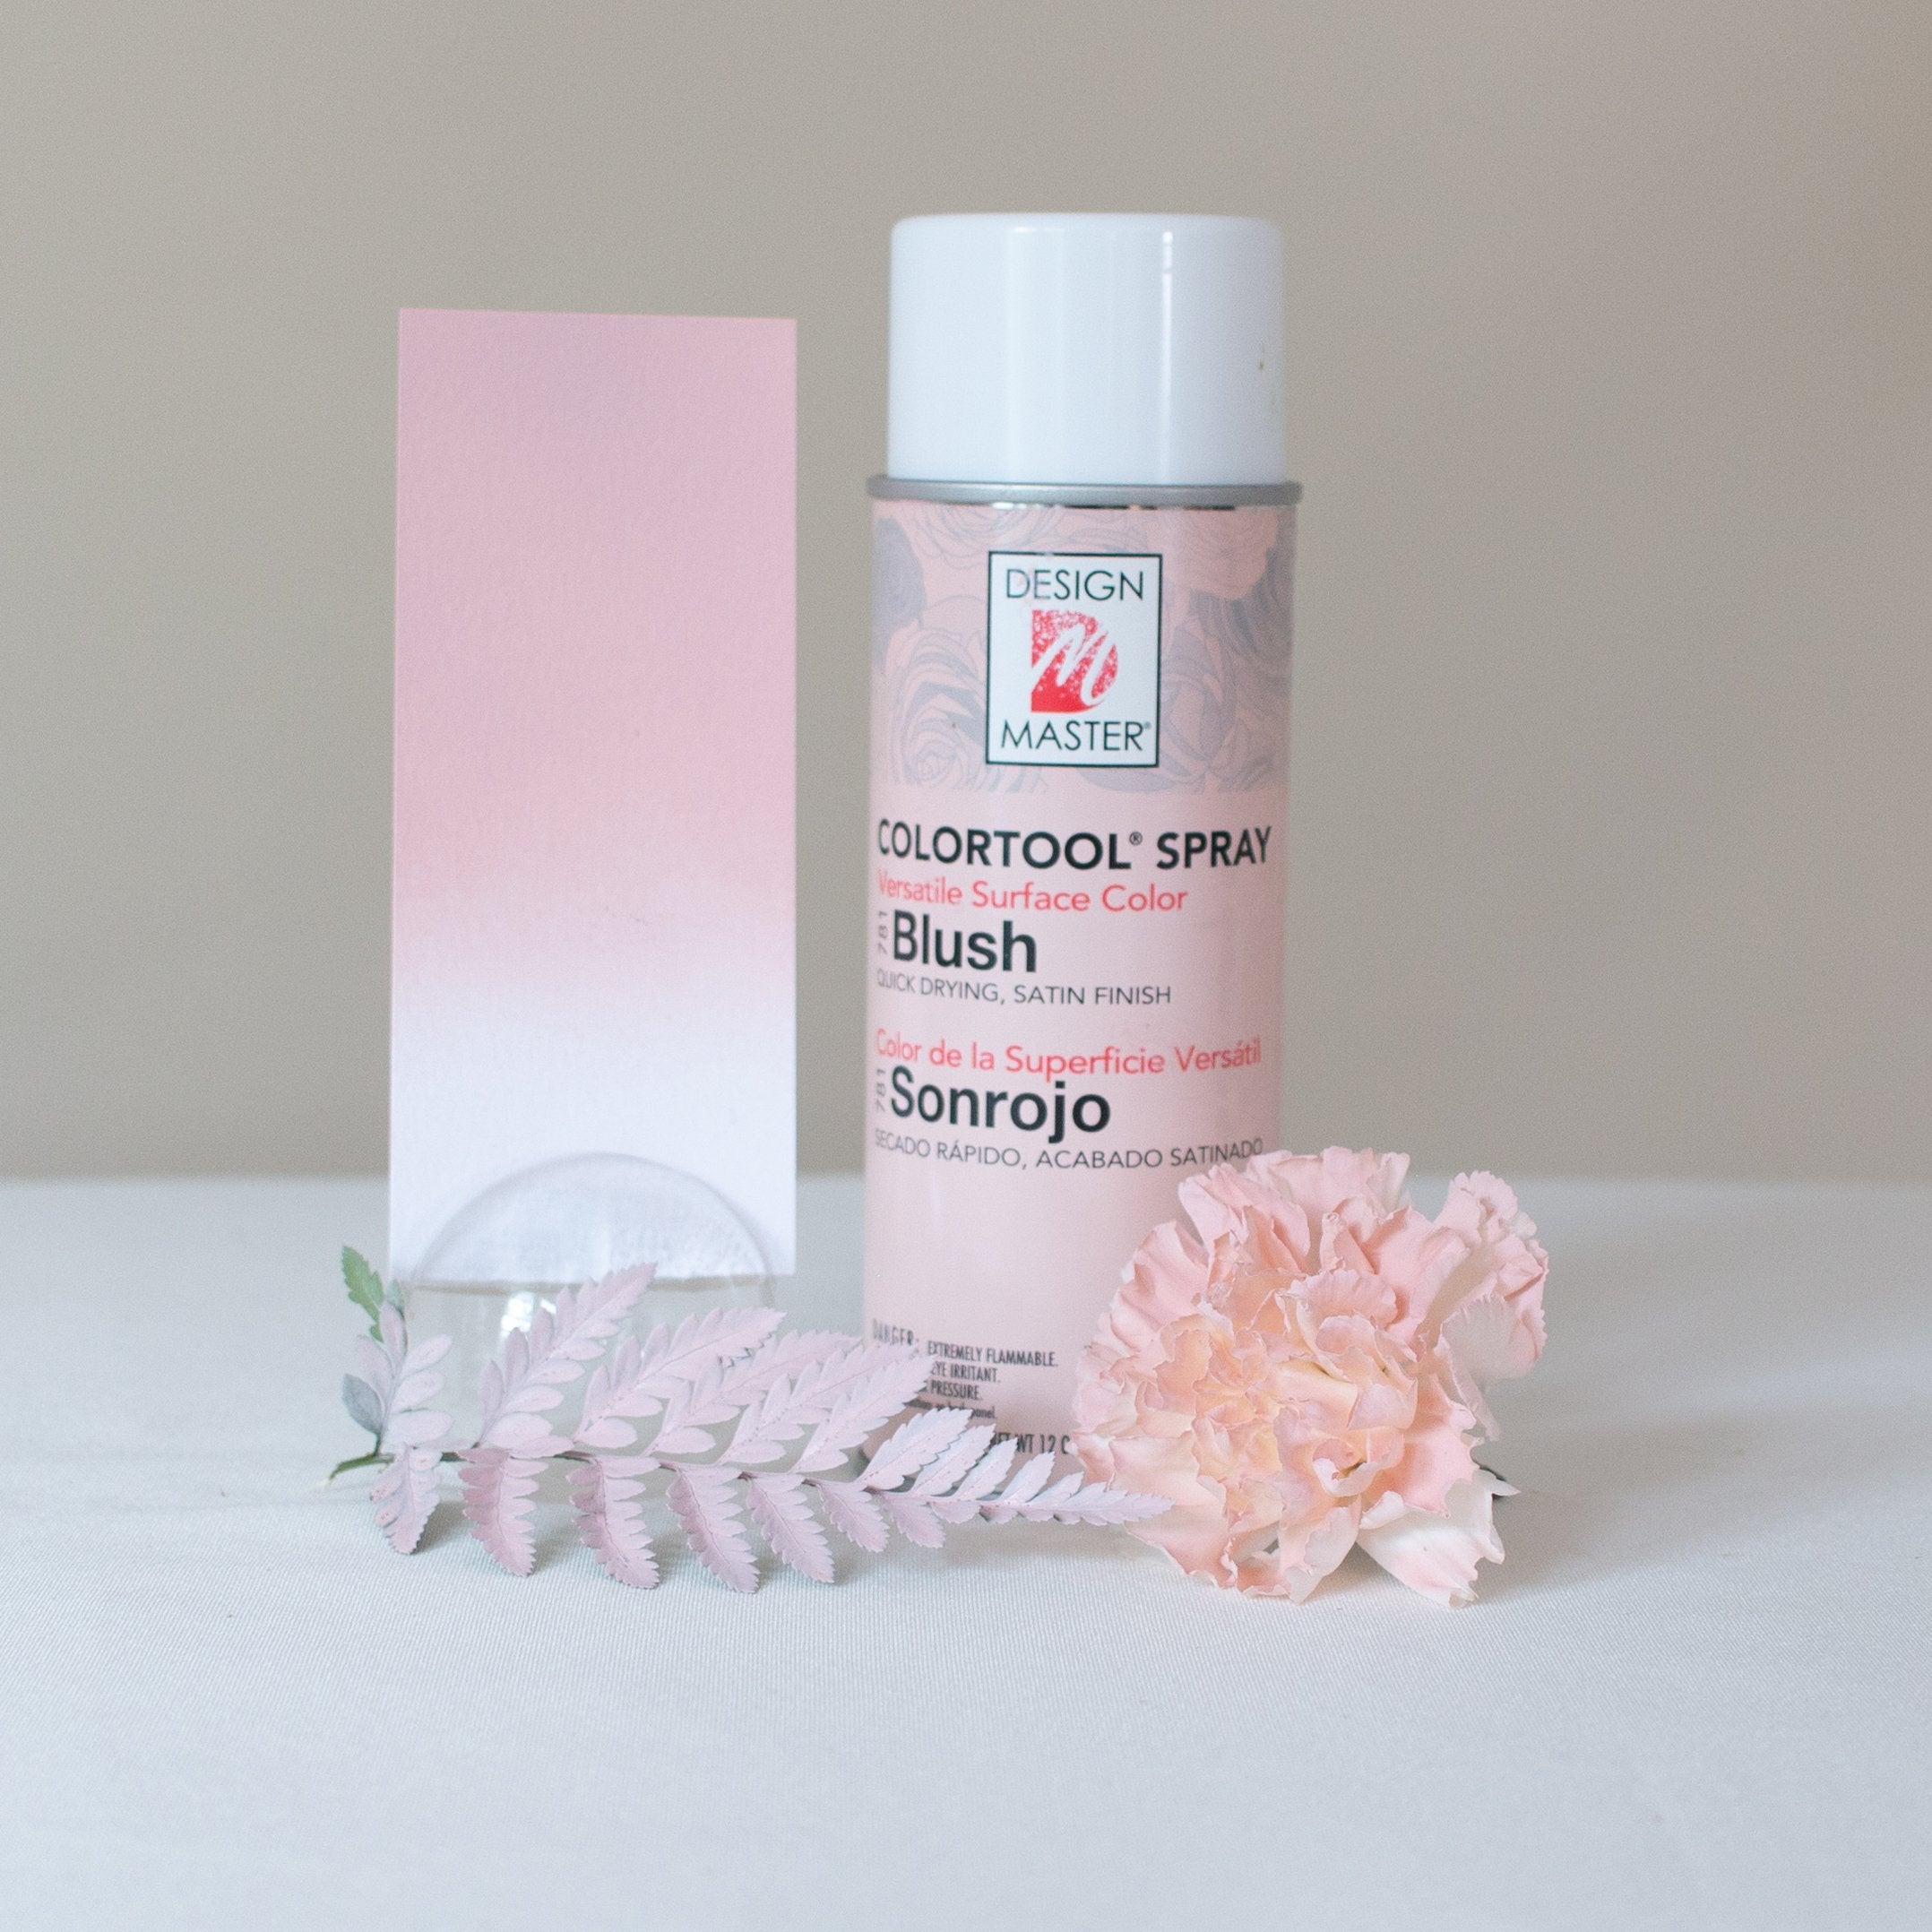 Blush Design Master Colortool Floral Spray Paint